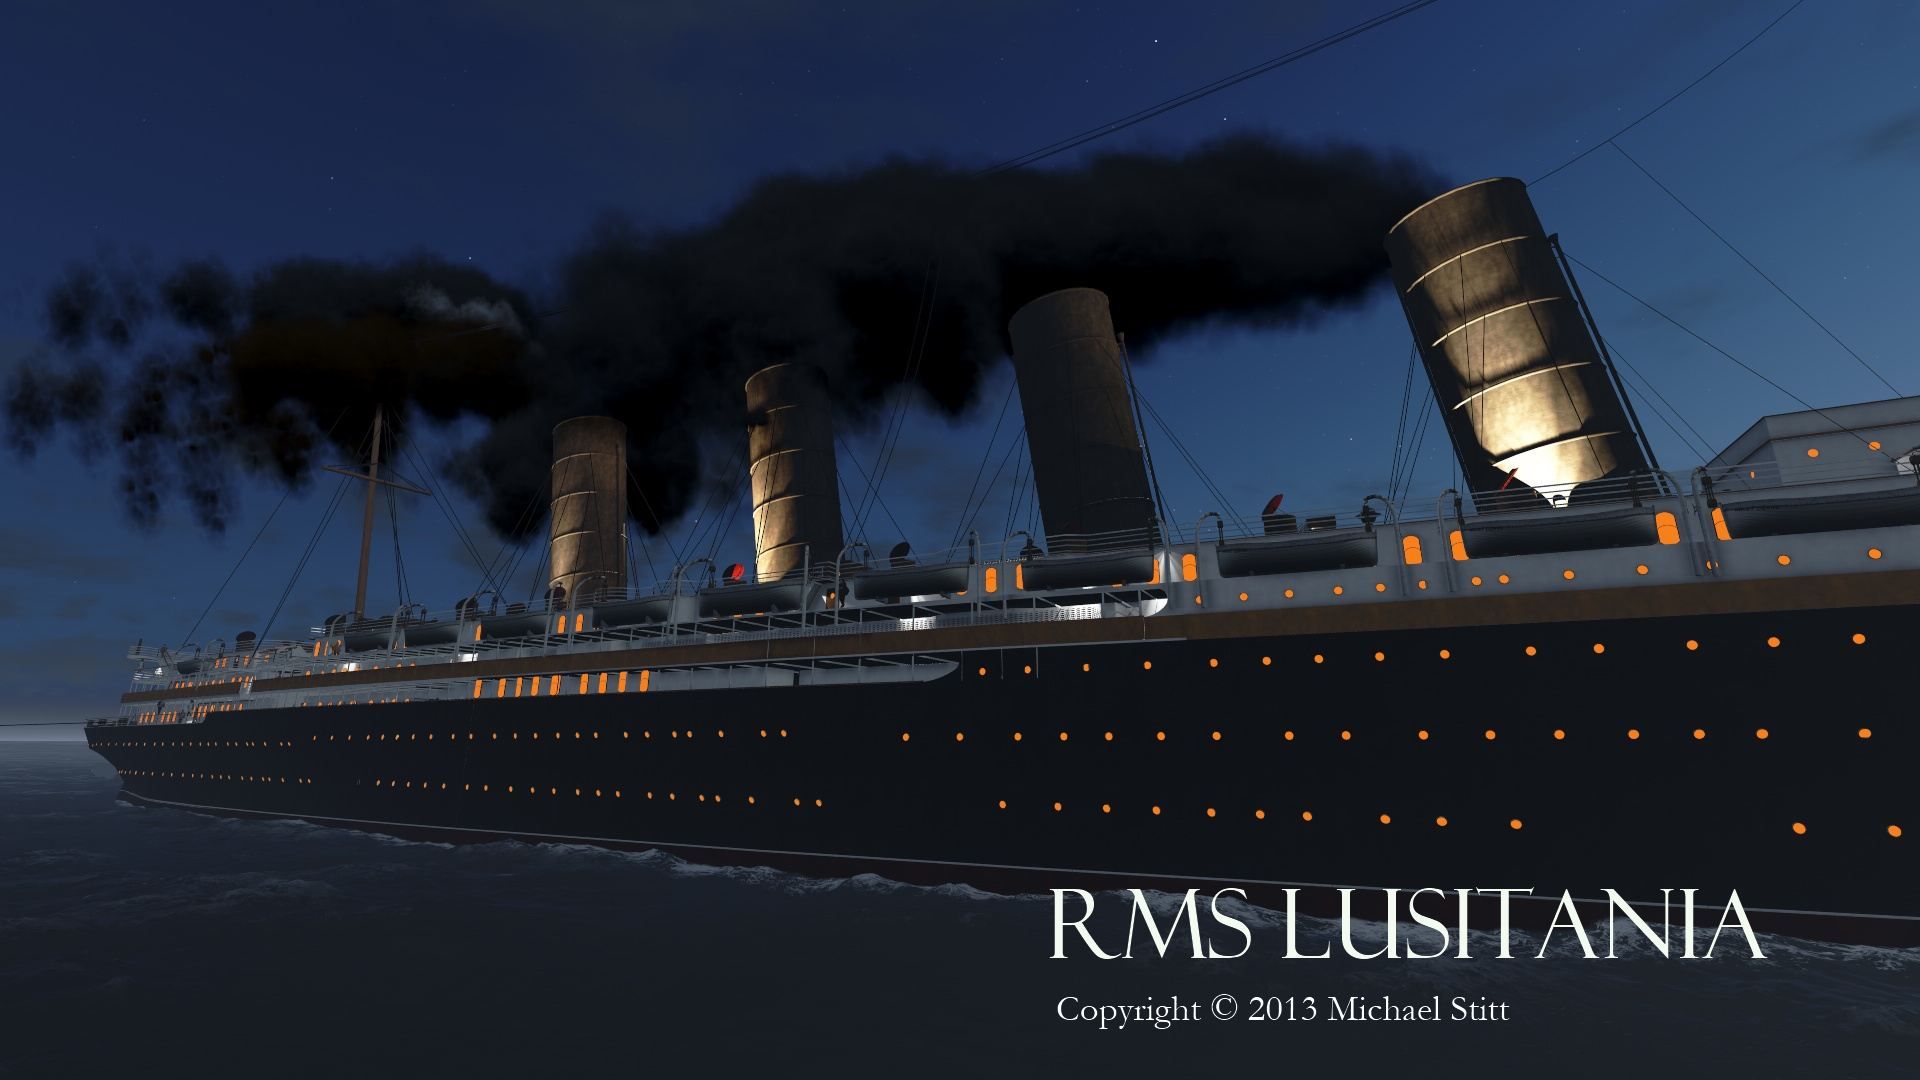 RMS LUSITANIA: HER LAST VOYAGE